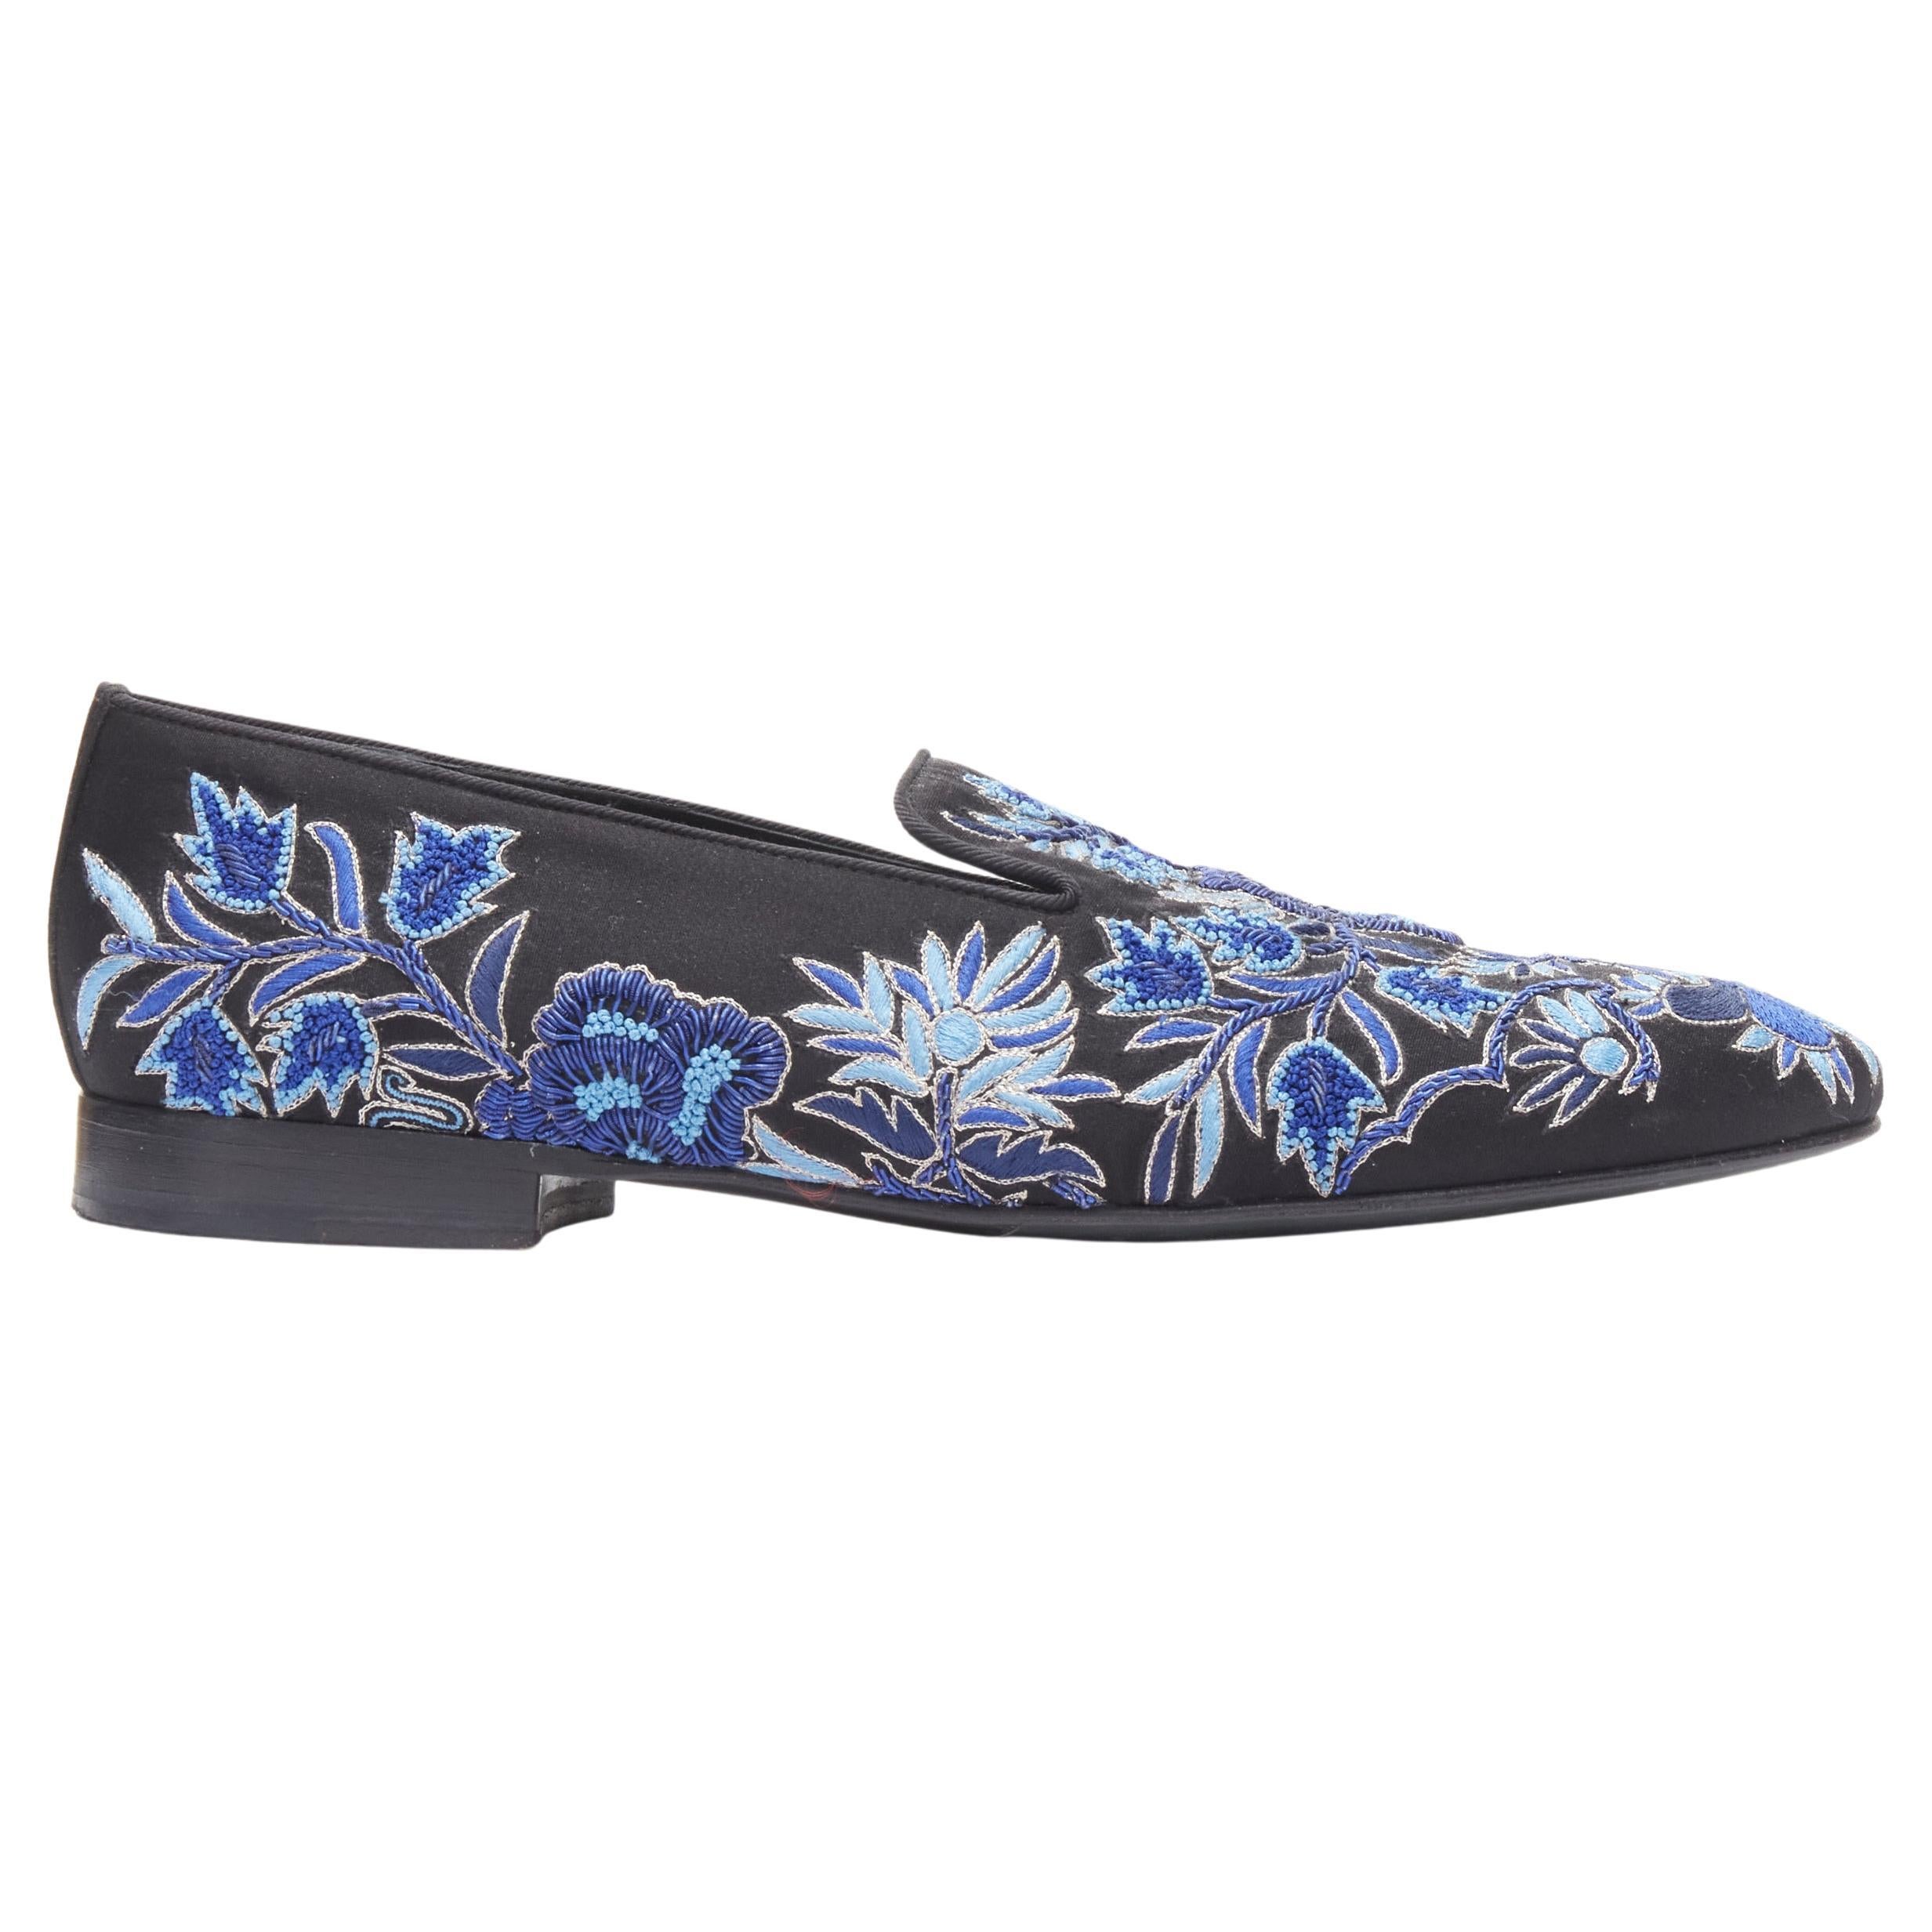 LOUIS LEEMAN black satin blue floral embroidery evening loafer EU42 US9 For Sale